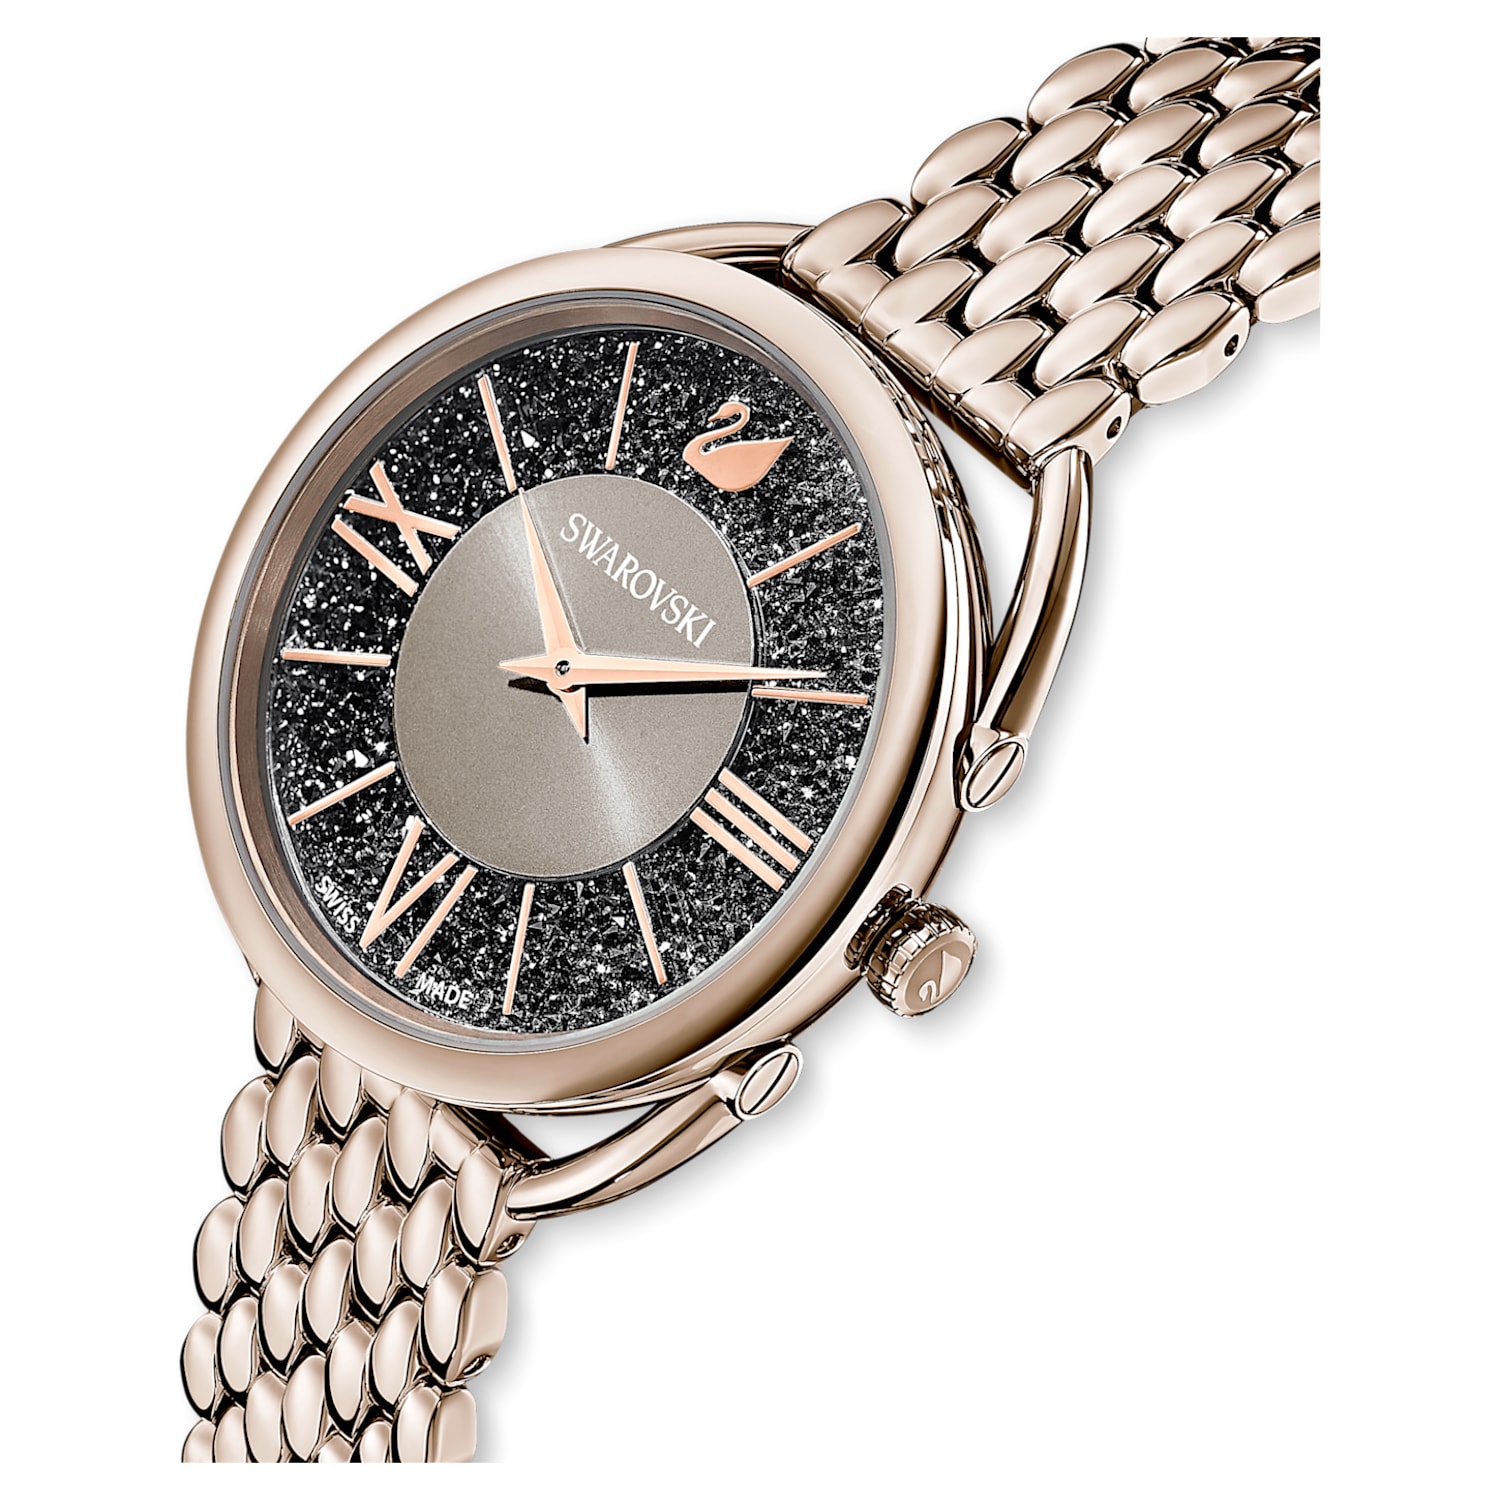 Crystalline Glam watch, Metal bracelet, Gray, Champagne gold-tone finish